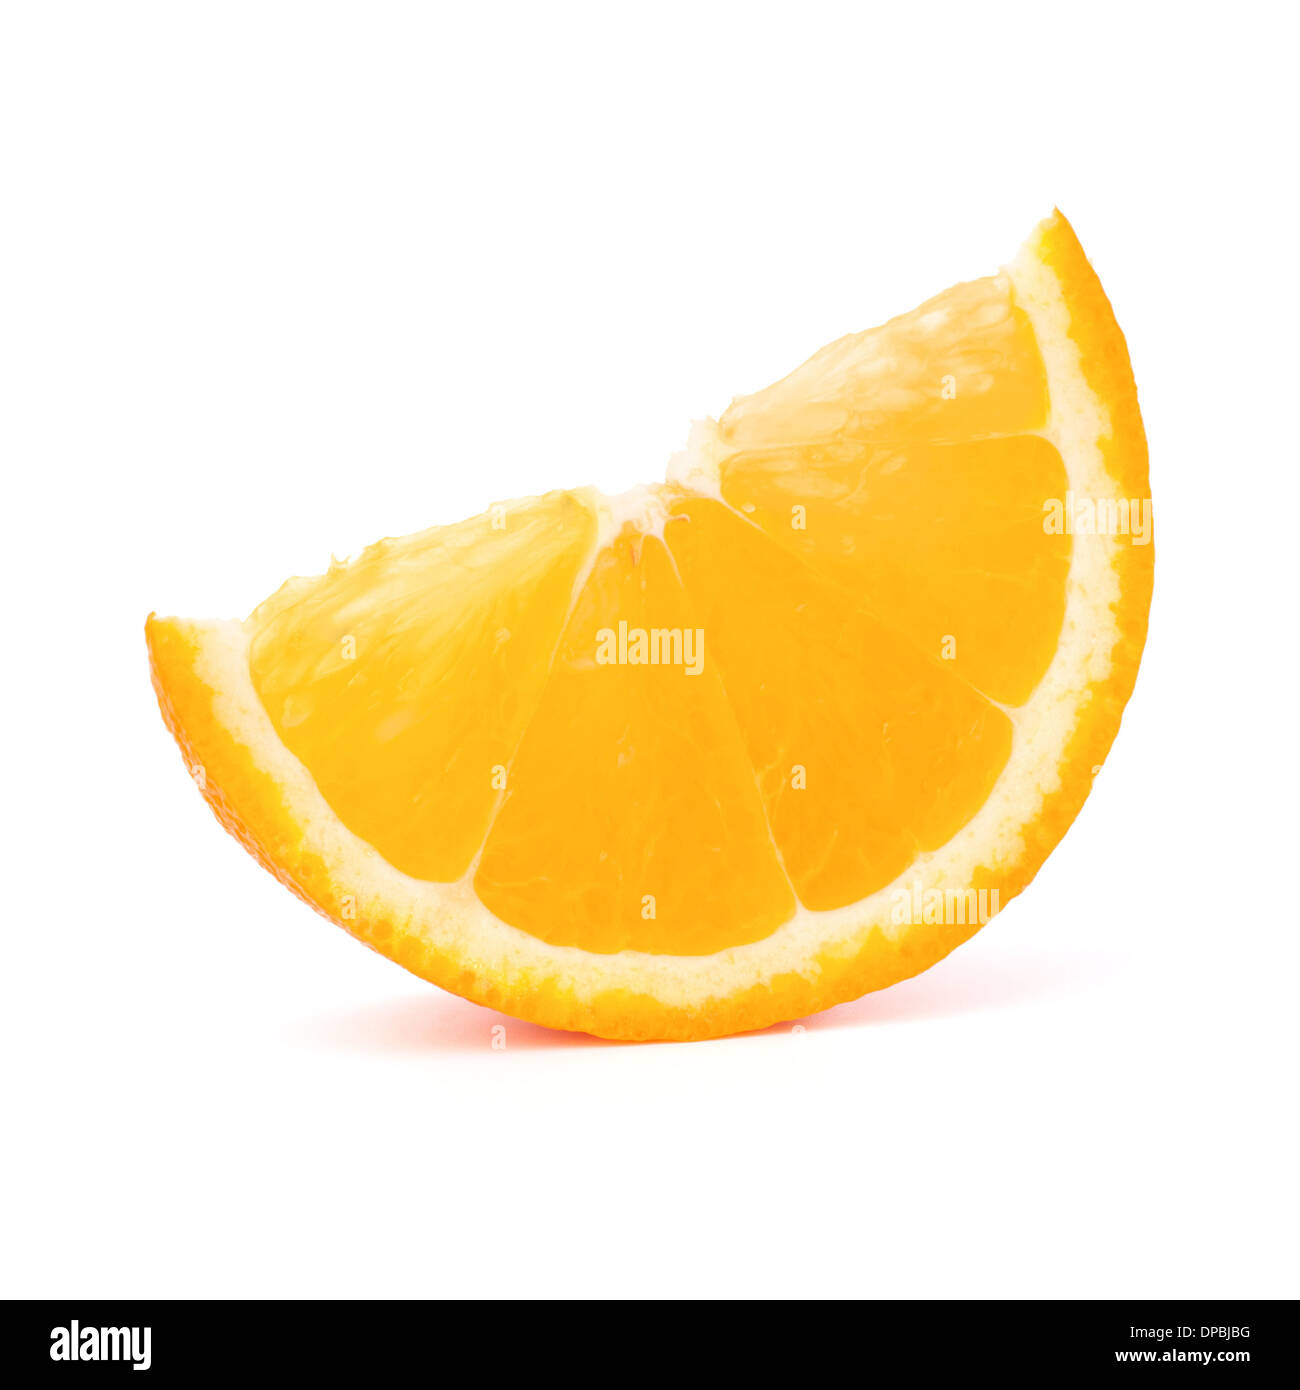 One orange fruit segment or cantle isolated on white background cutout Stock Photo